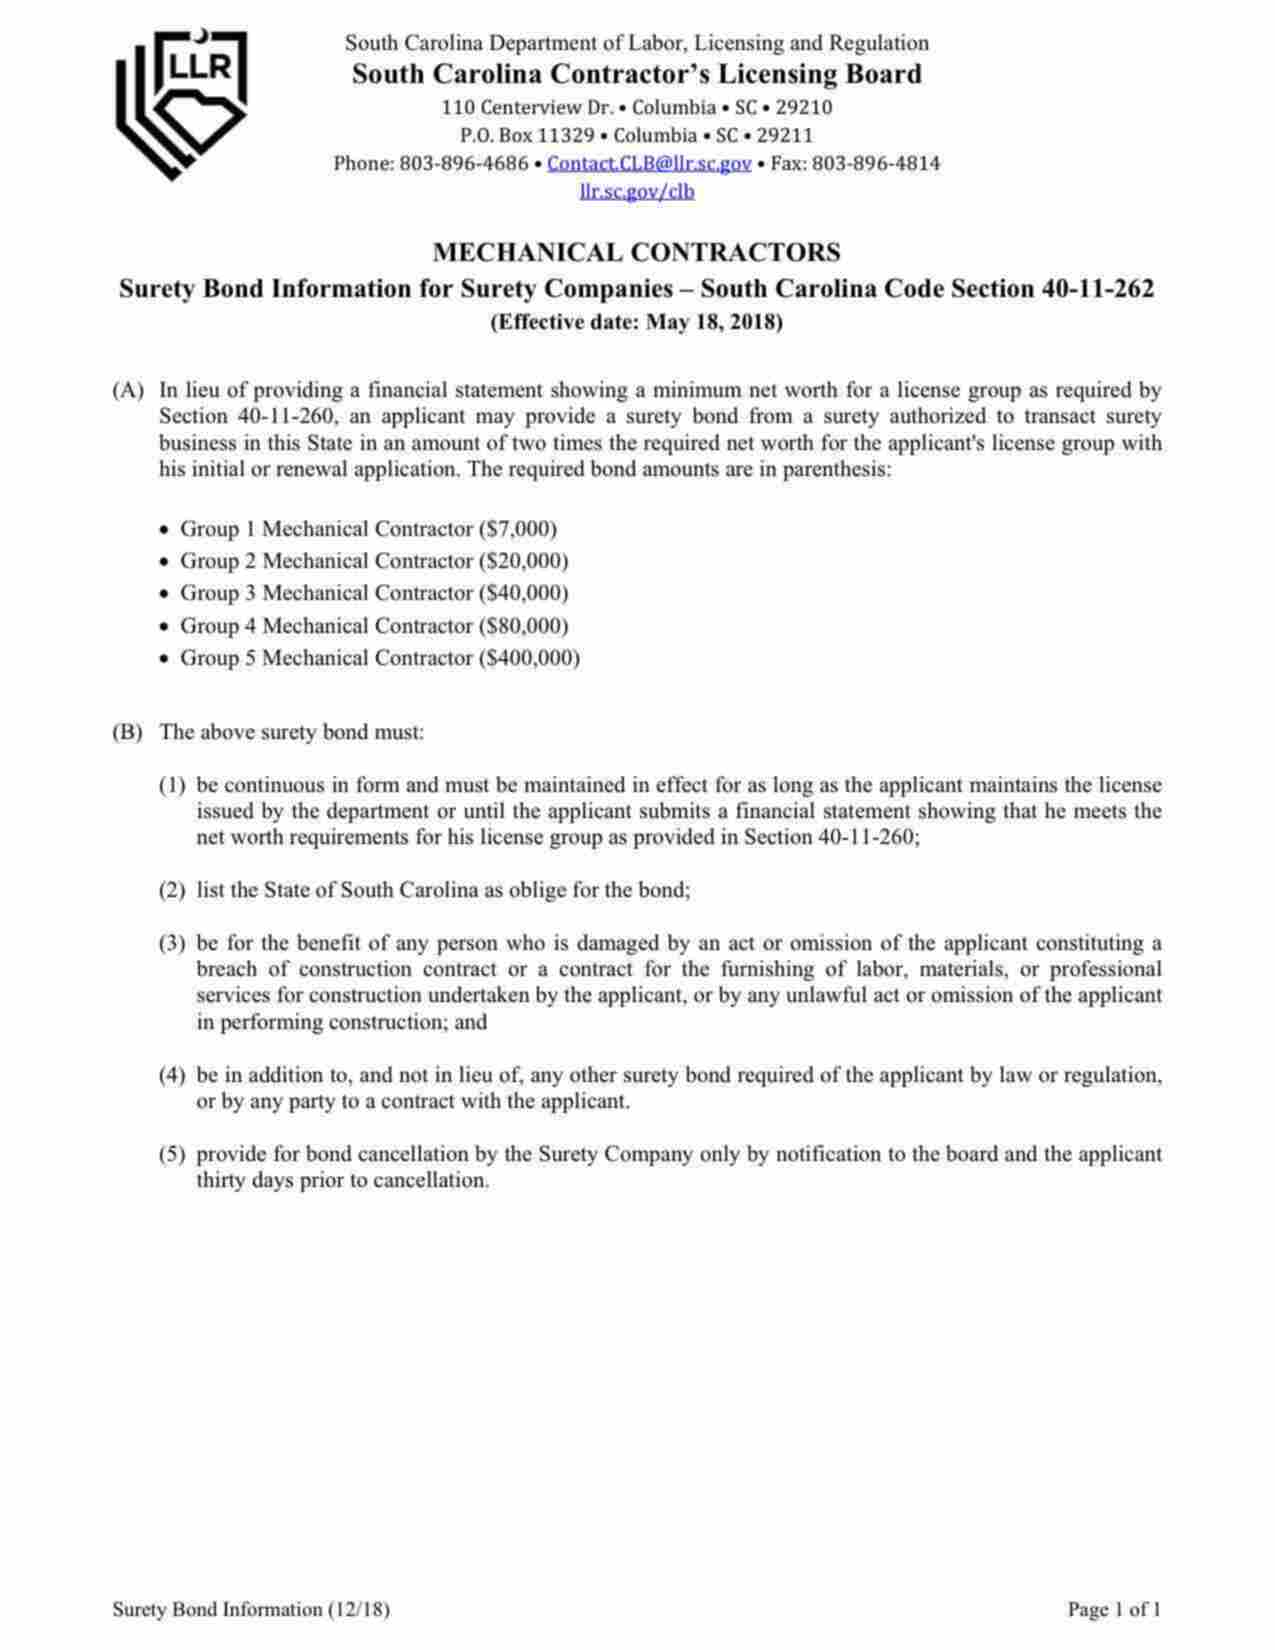 South Carolina Mechanical Contractor (Group 2) Bond Form